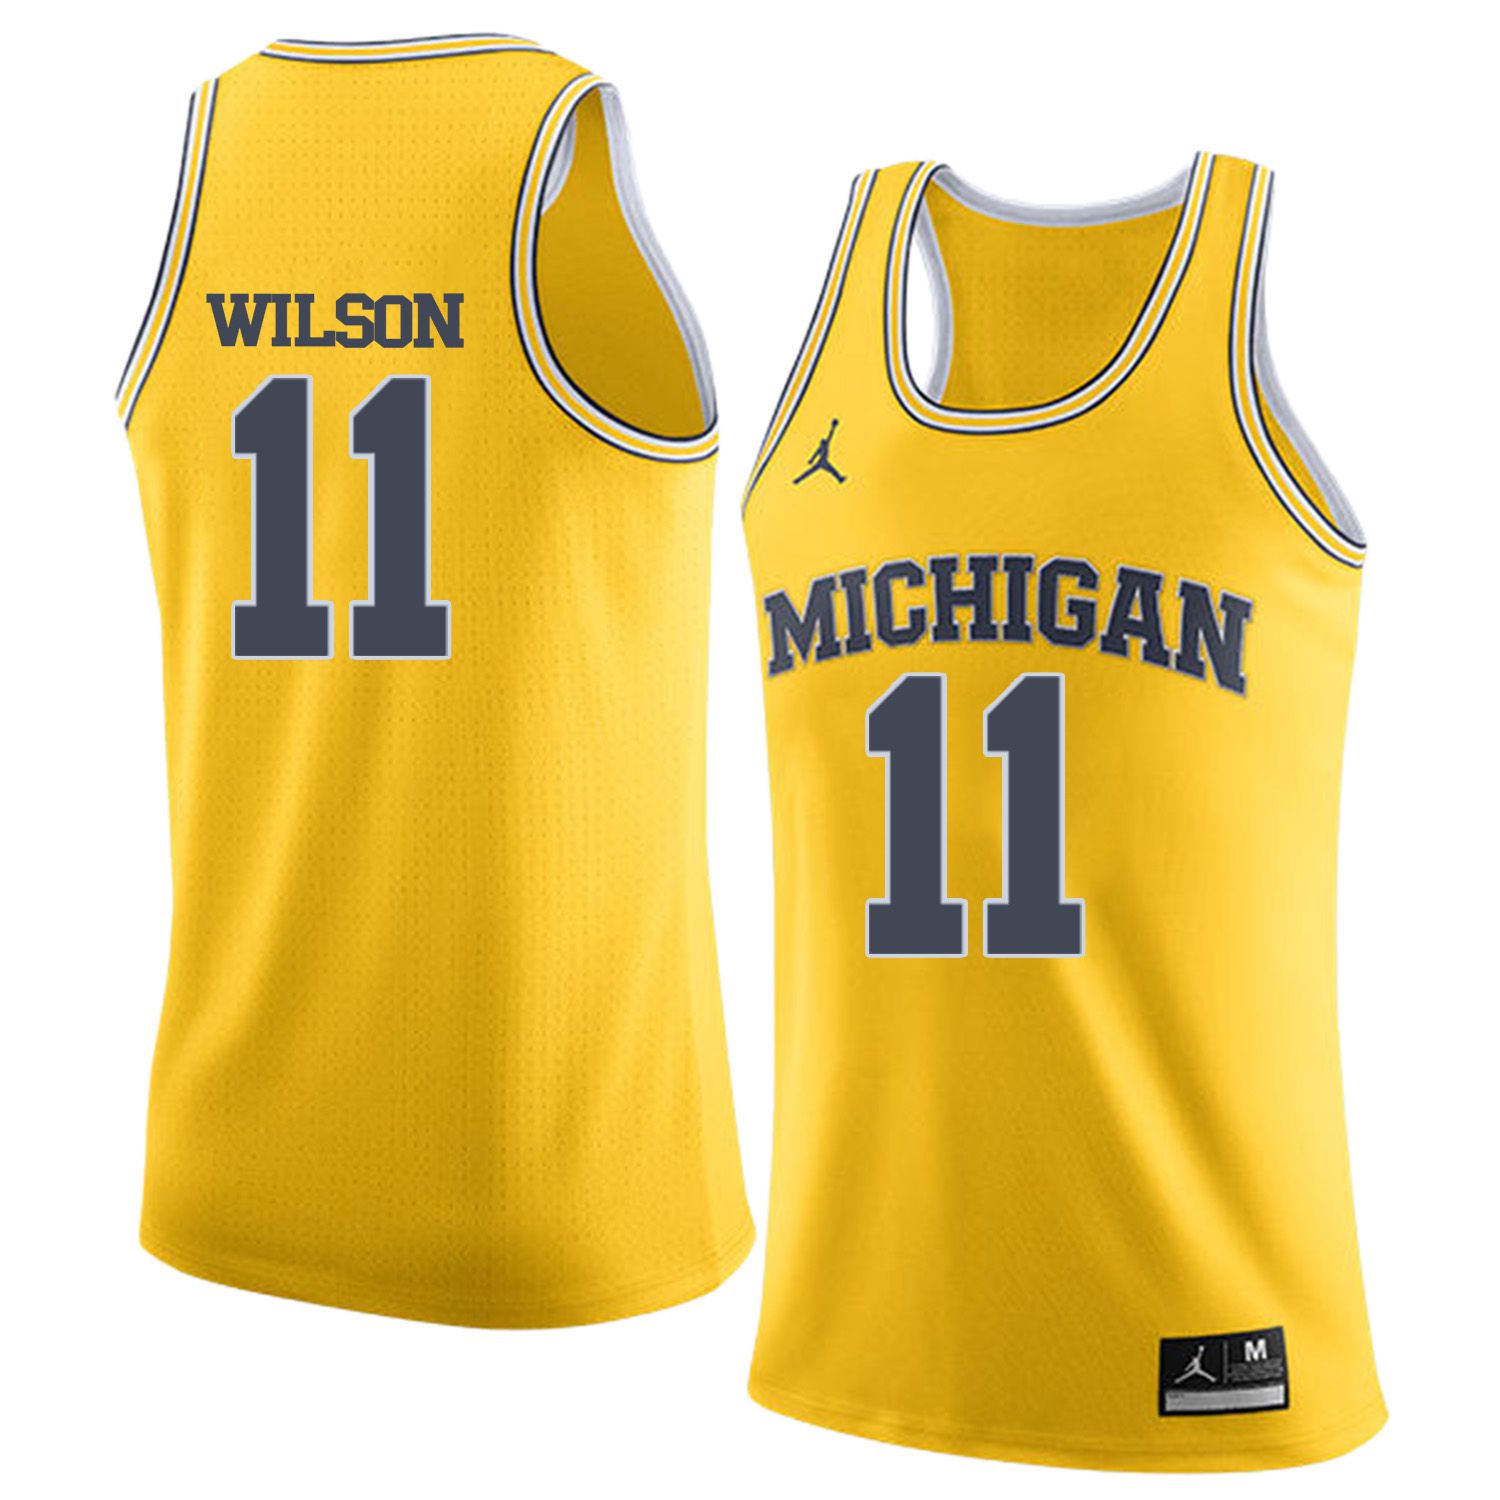 Men Jordan University of Michigan Basketball Yellow 11 Wilson Customized NCAA Jerseys